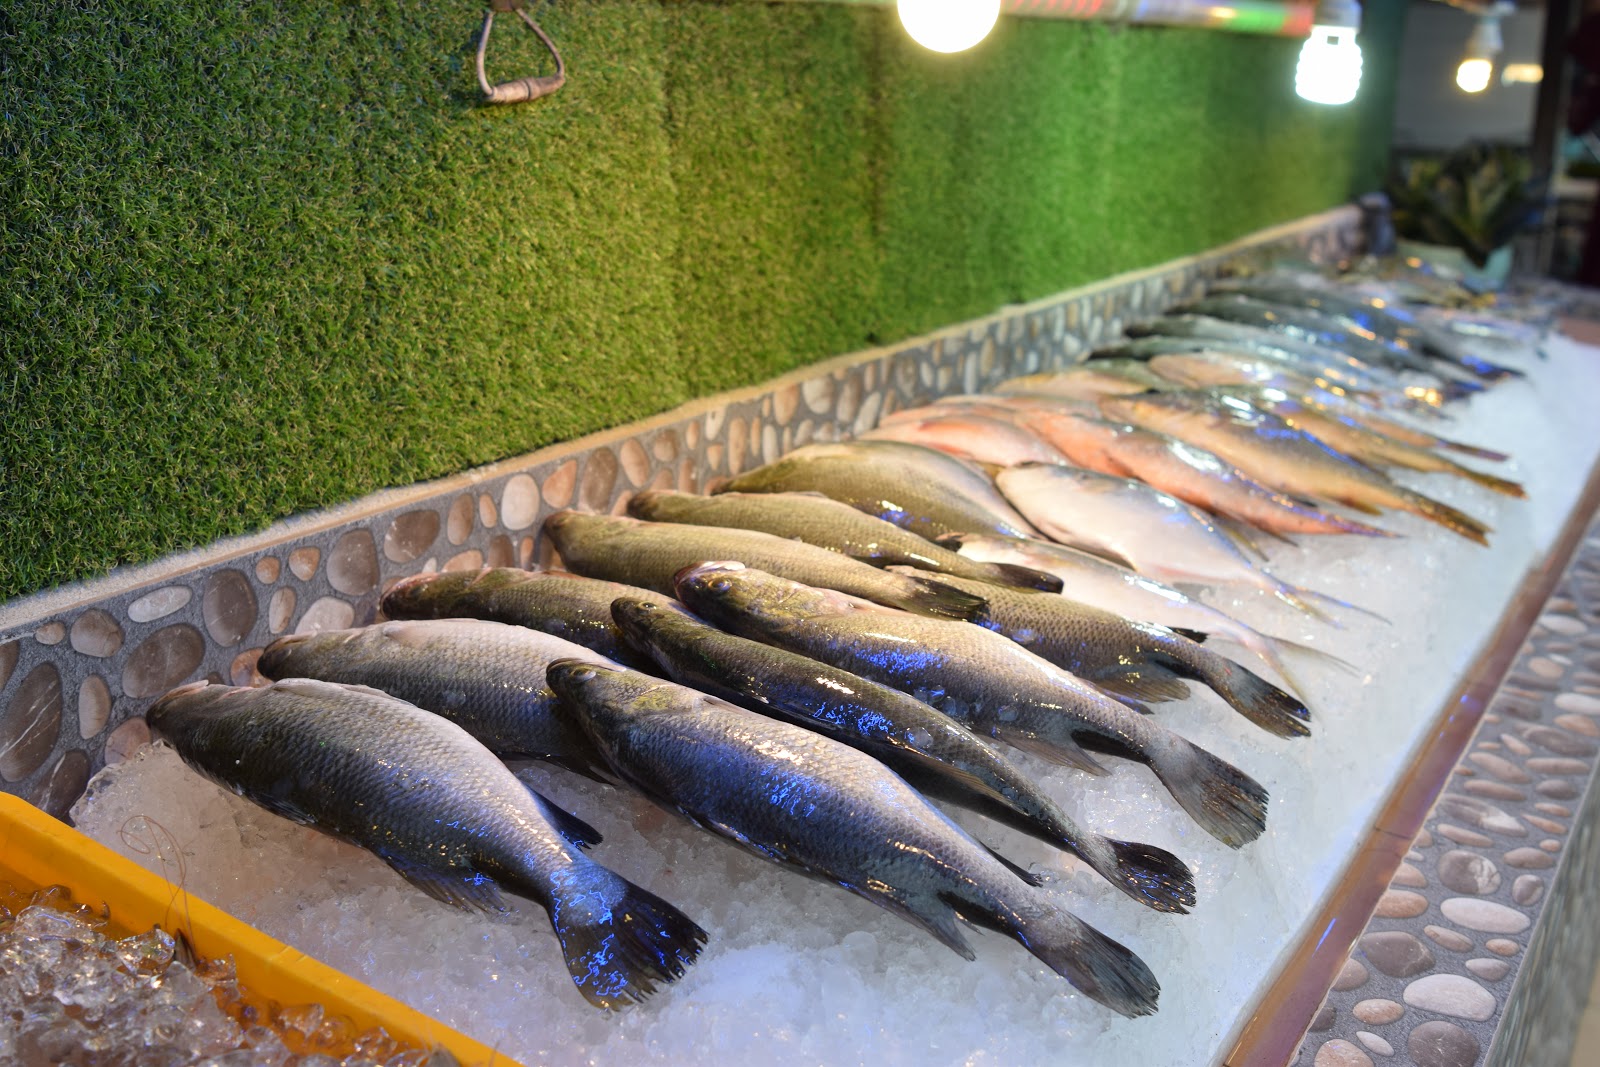 Idrus Ikan Bakar @ Batu Uban, Bayan Lepas, Penang